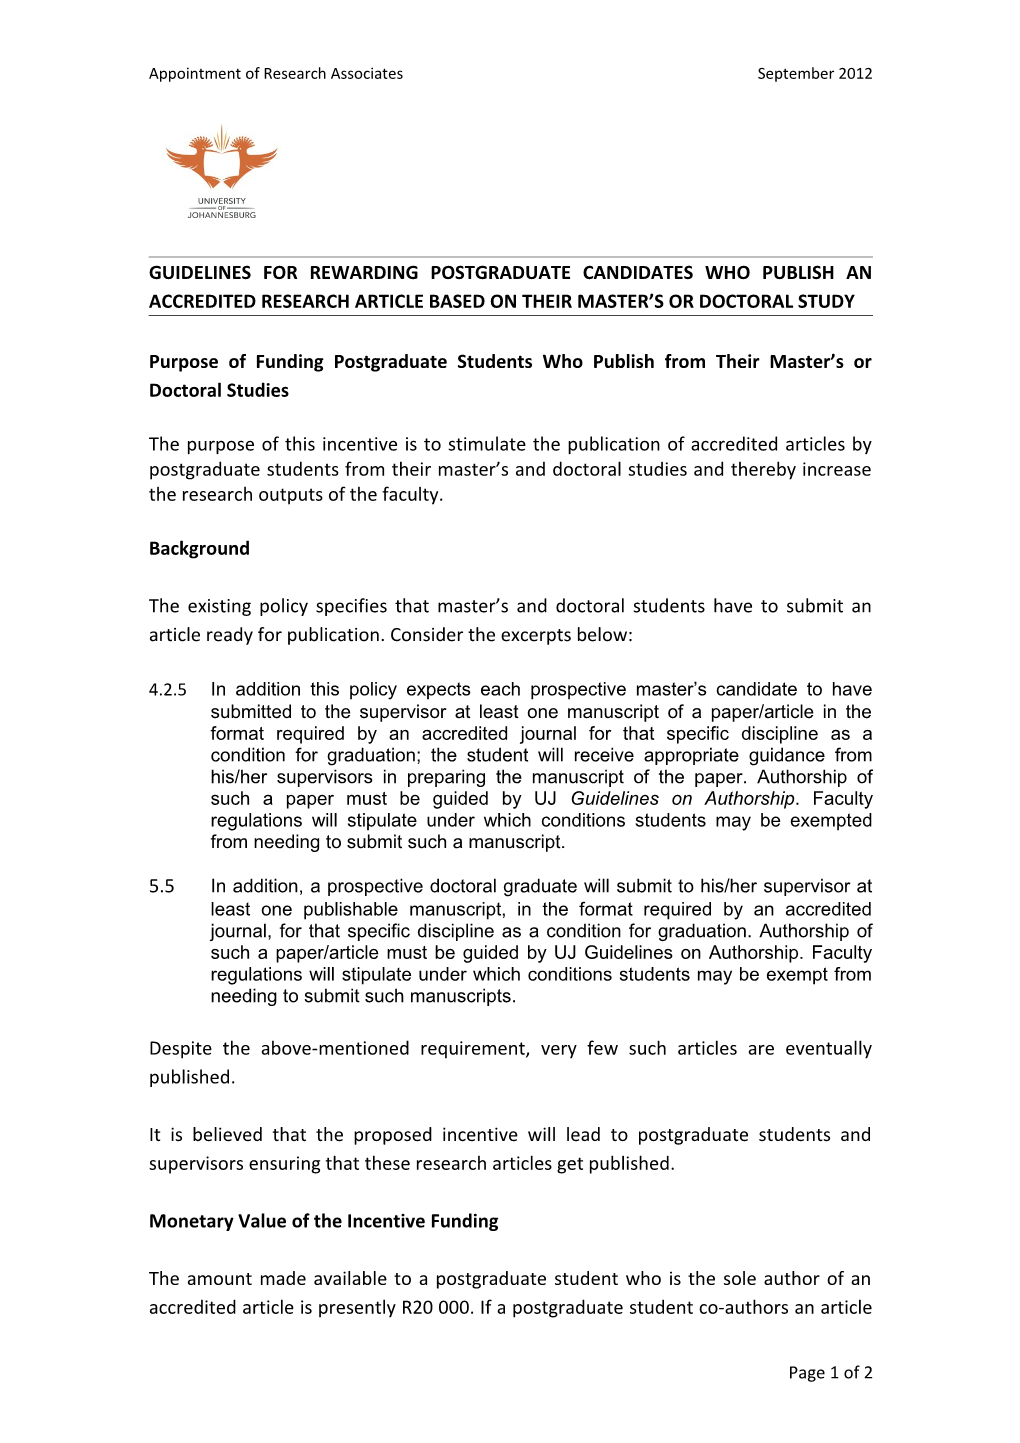 Postgraduate Student Article Publication Incentive 2012-10-04